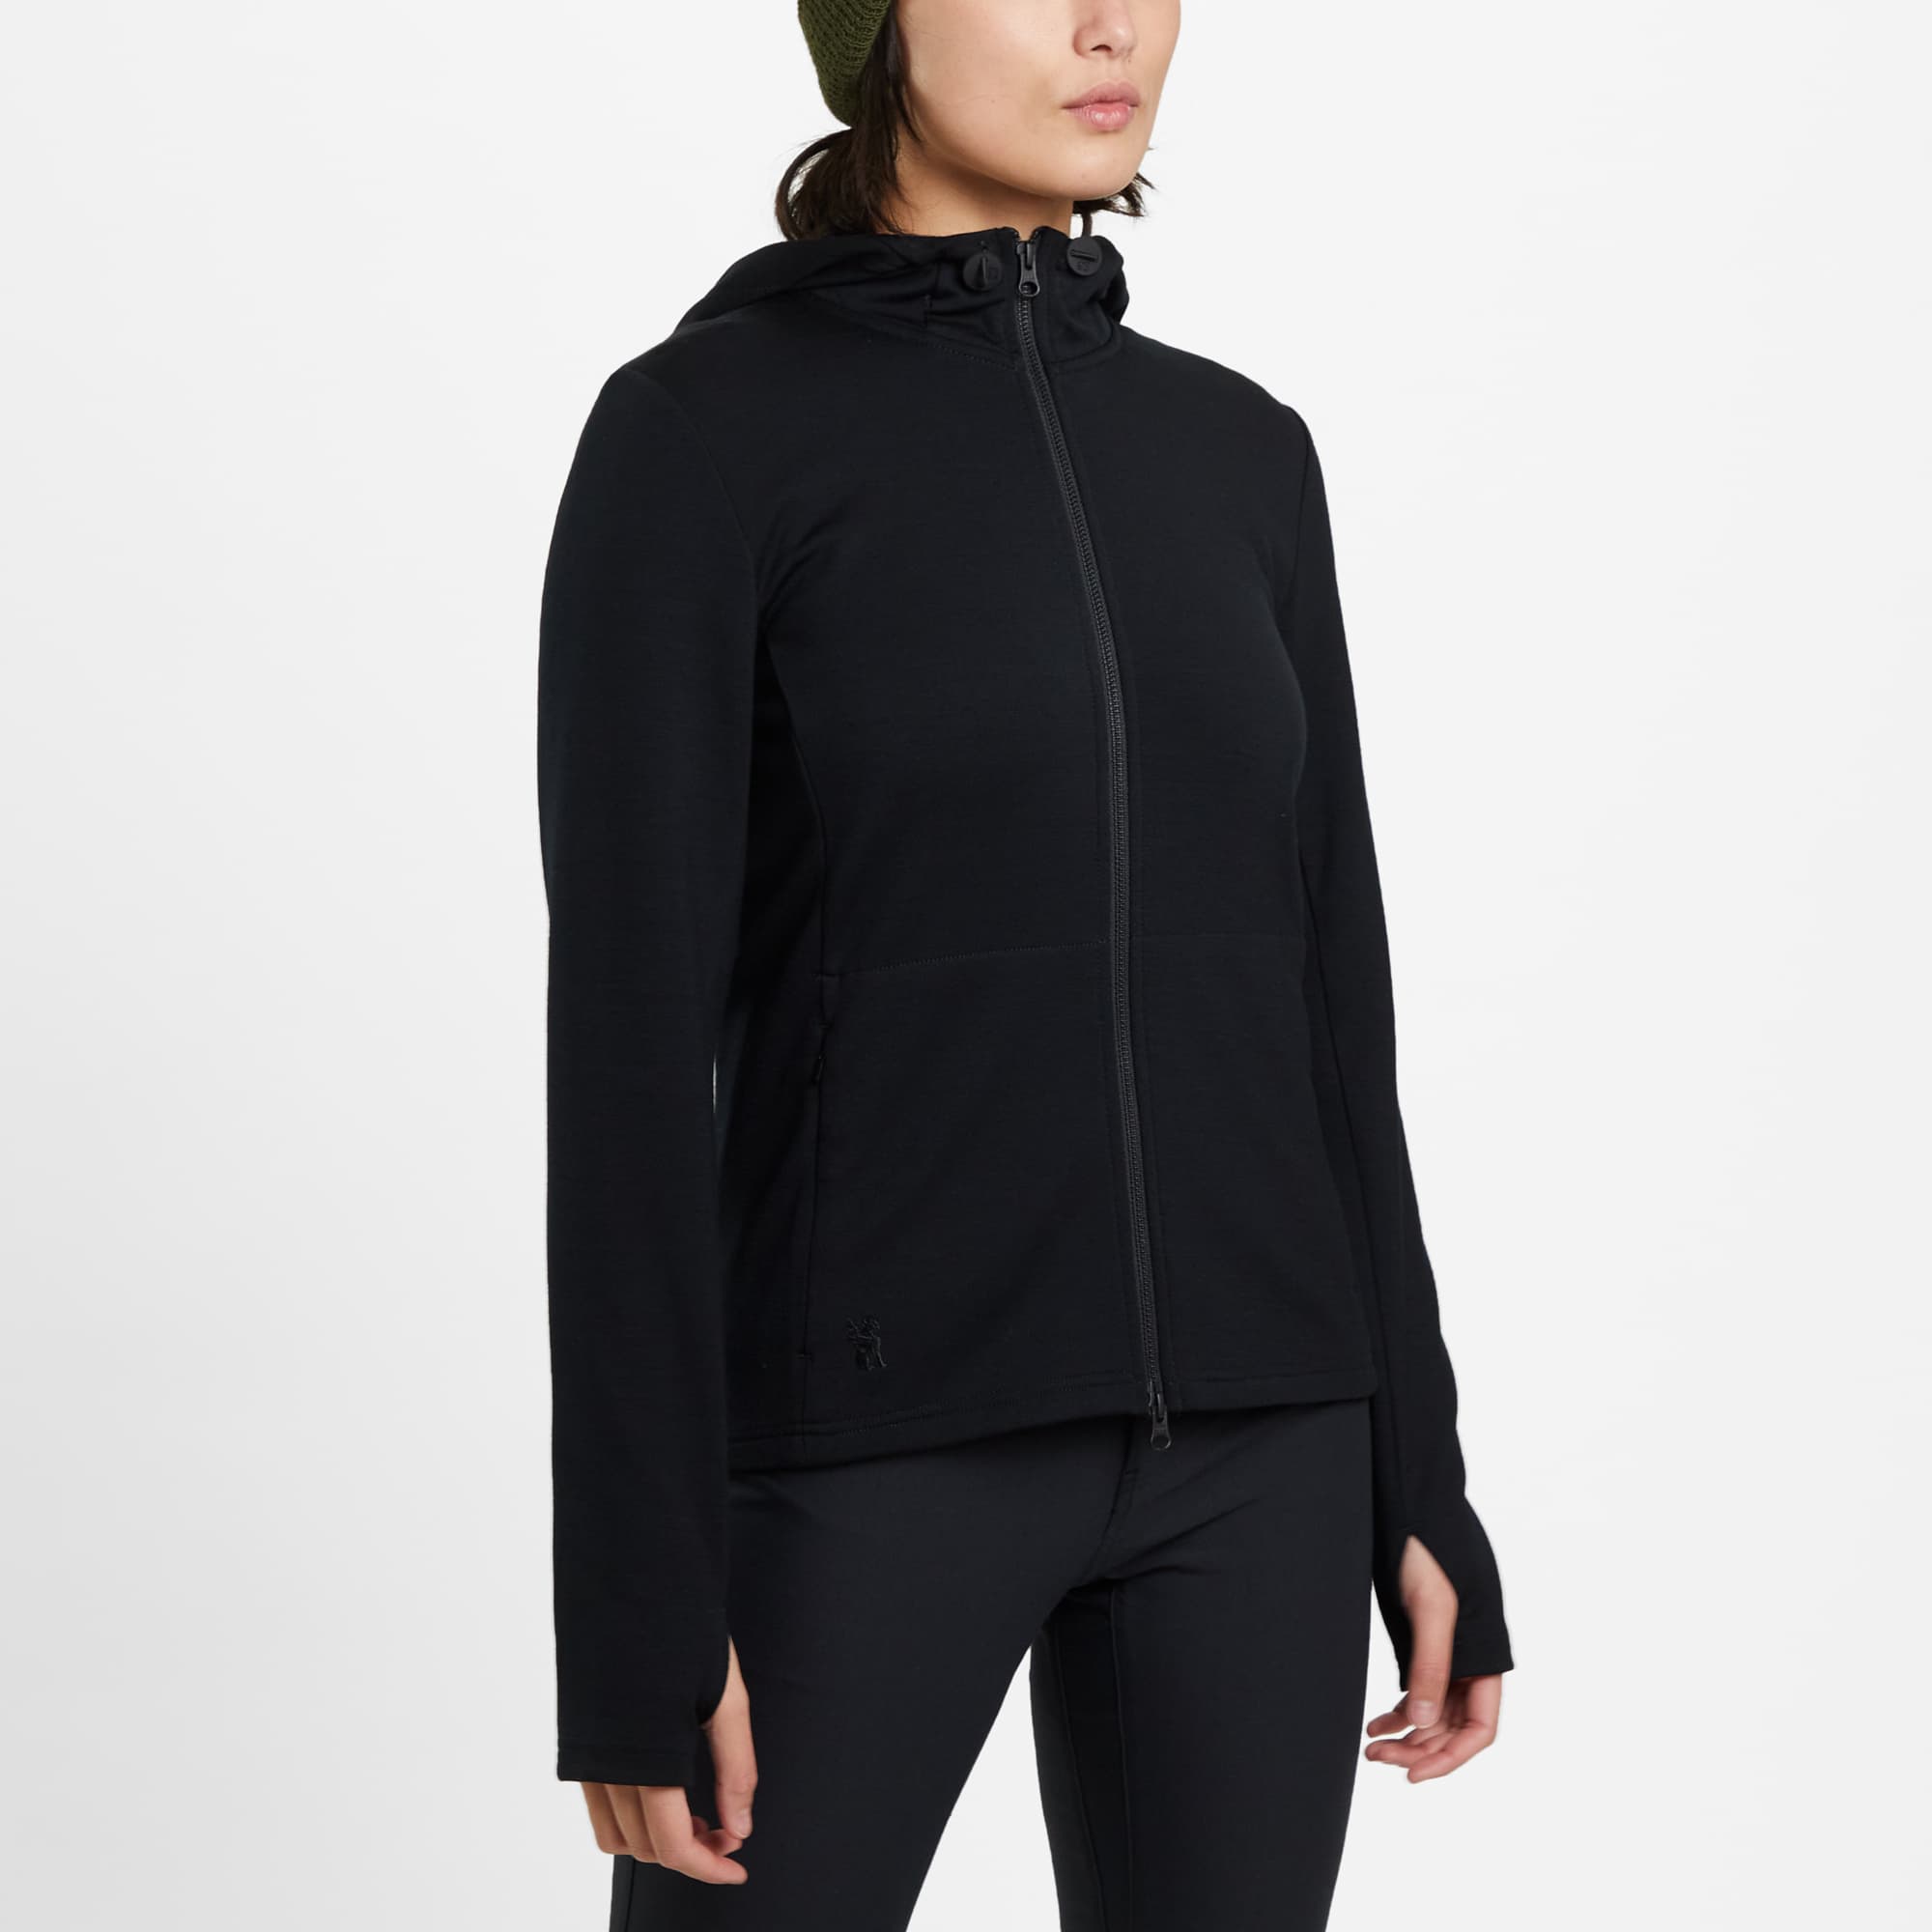 Women's Merino blend performance hoodie in black worn by a woman side view